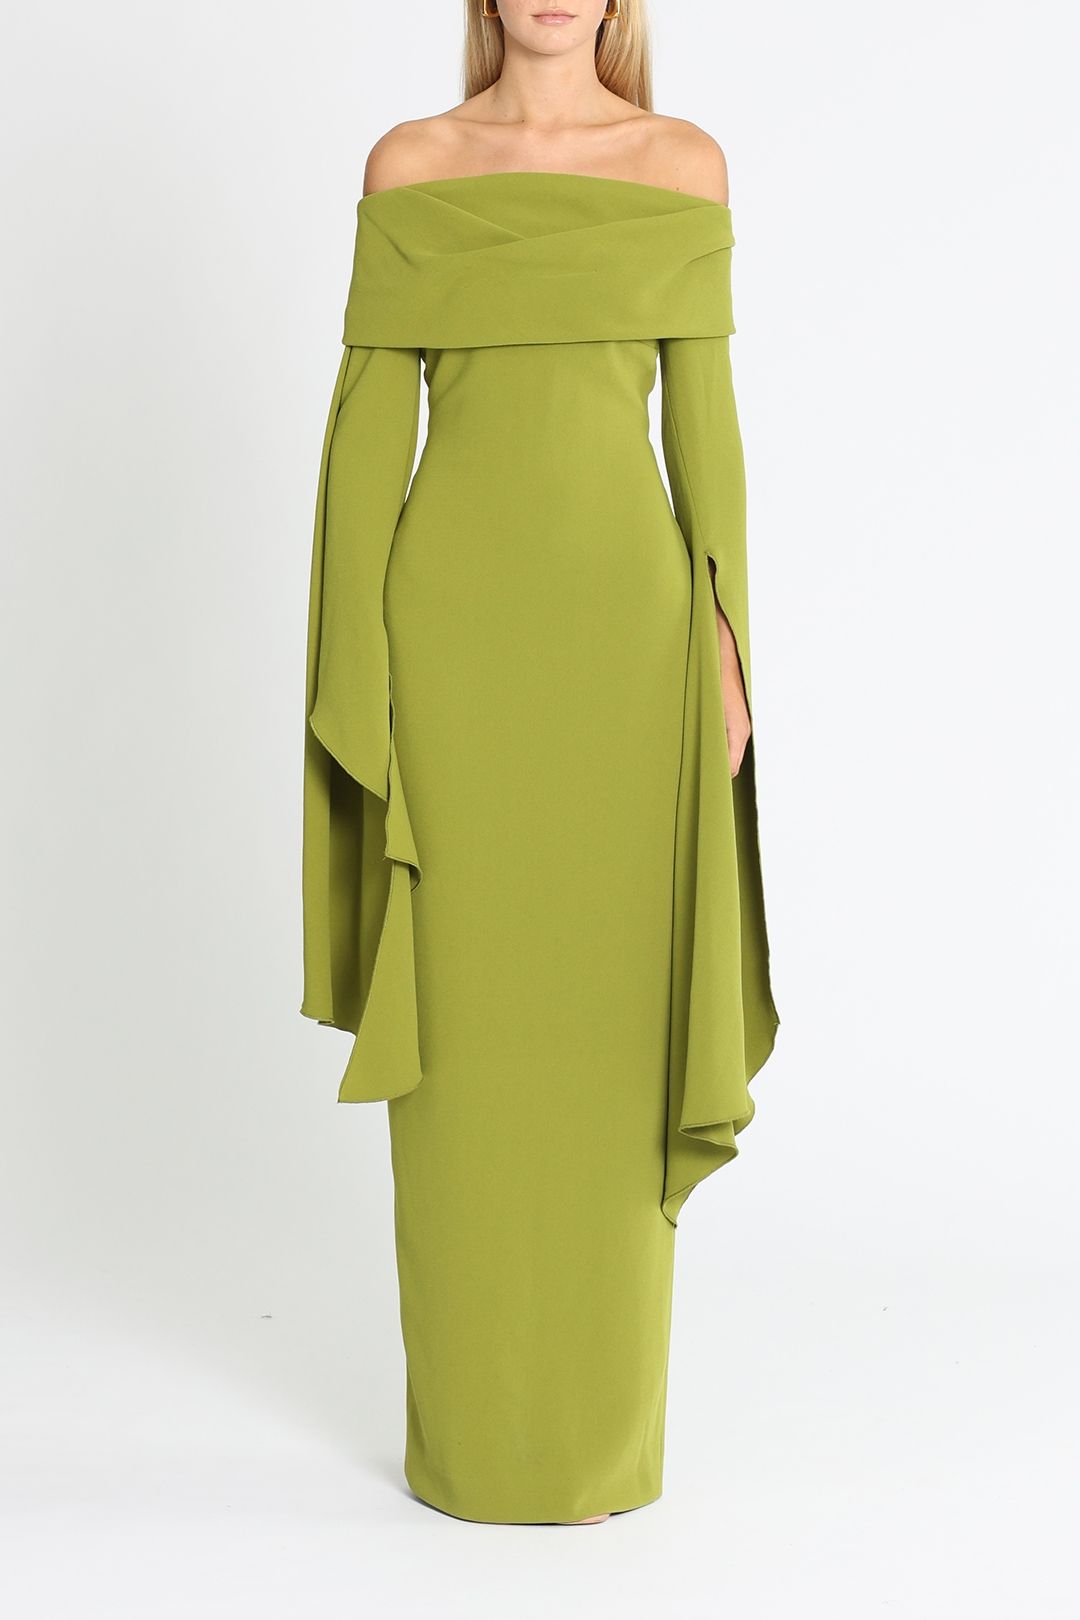 Solace London Arden Maxi Dress Green